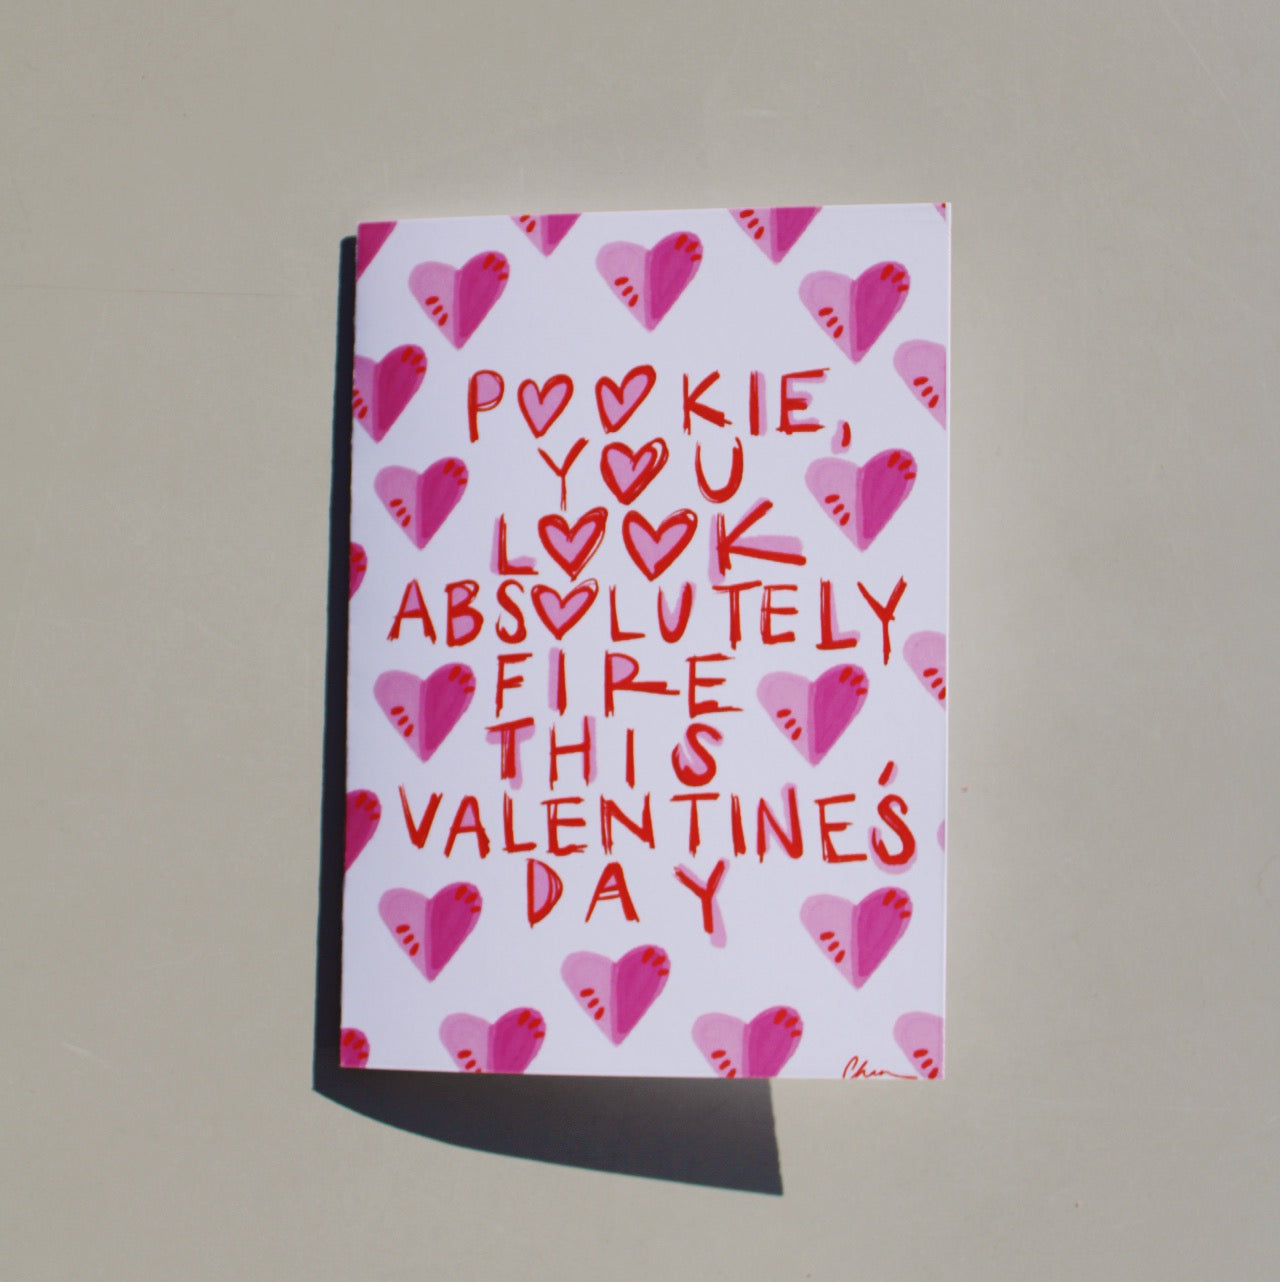 Pookie Valentine's Day Card